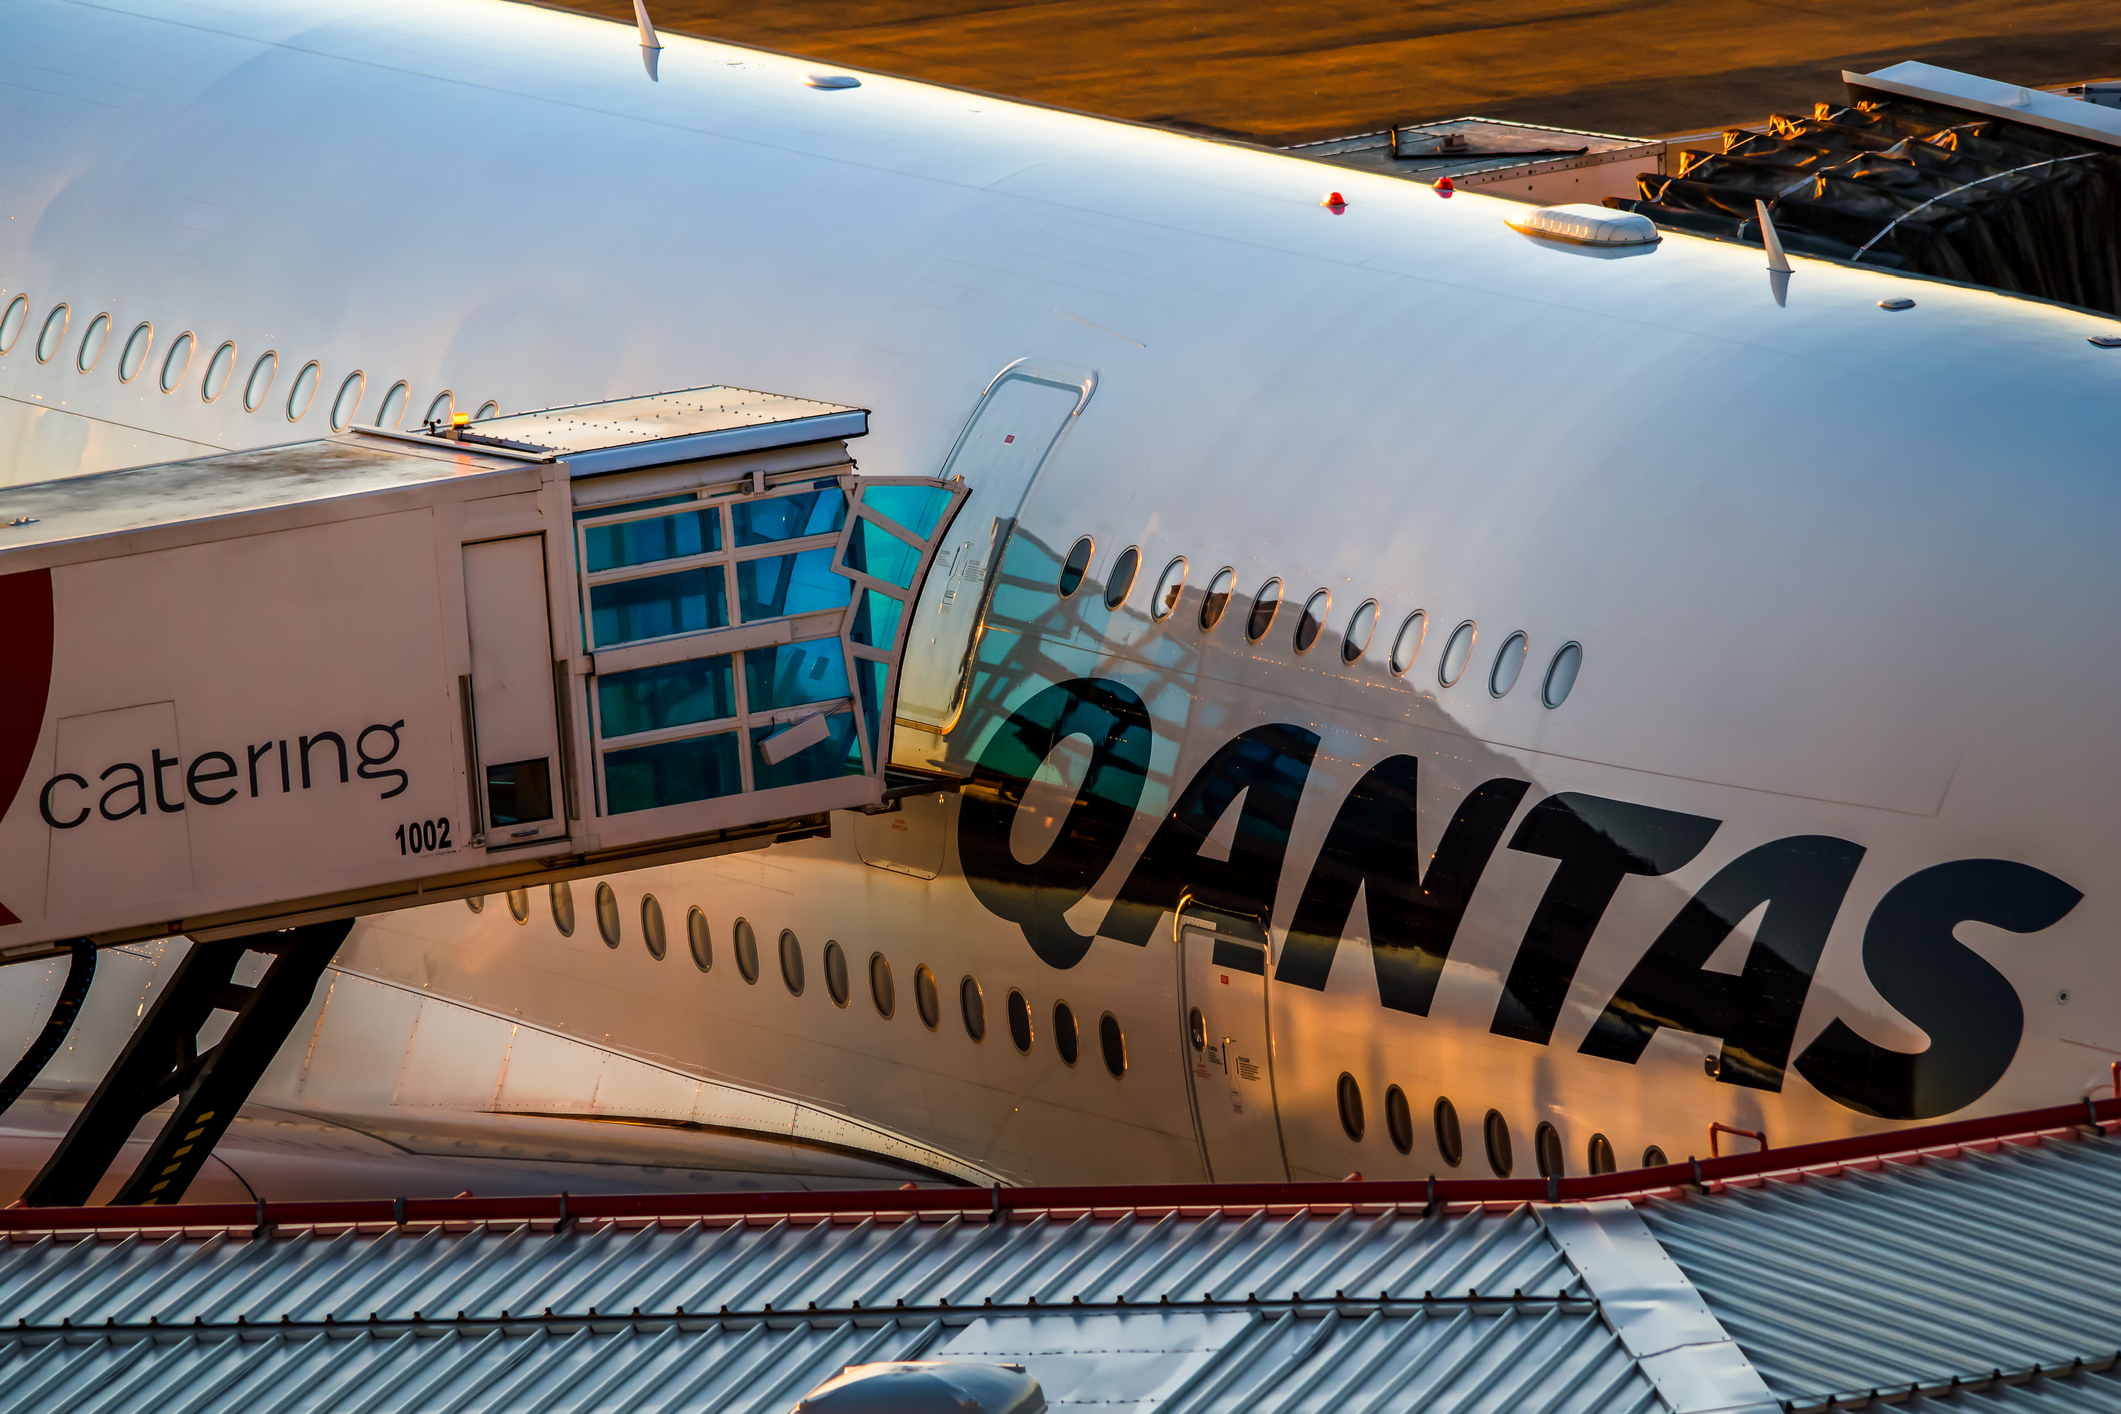 Qantas Launches Major Sustainability Initiative